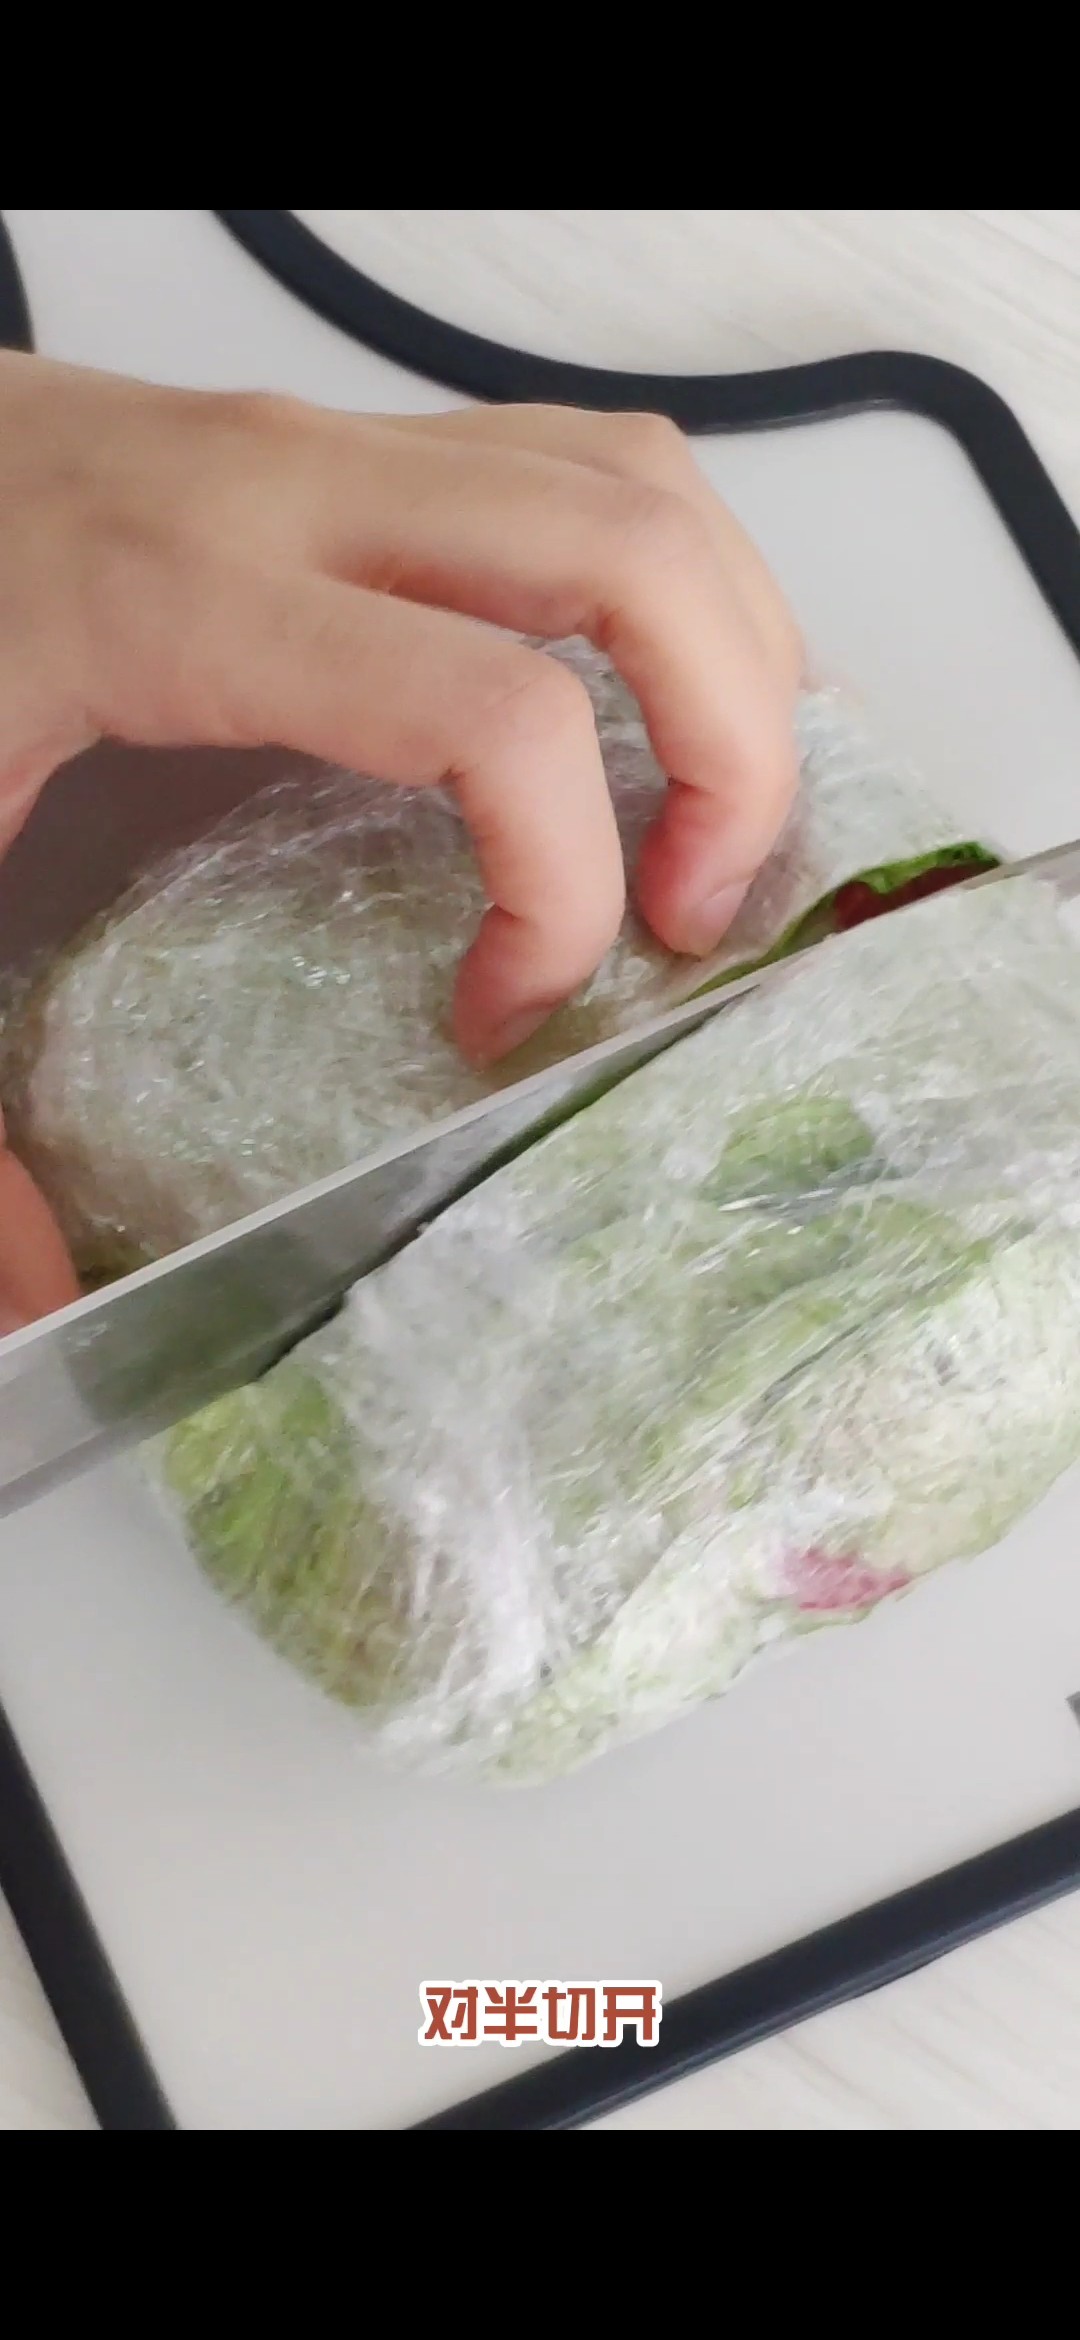 Lettuce Sandwich, Low-fat, Low-sugar and Low-calorie recipe